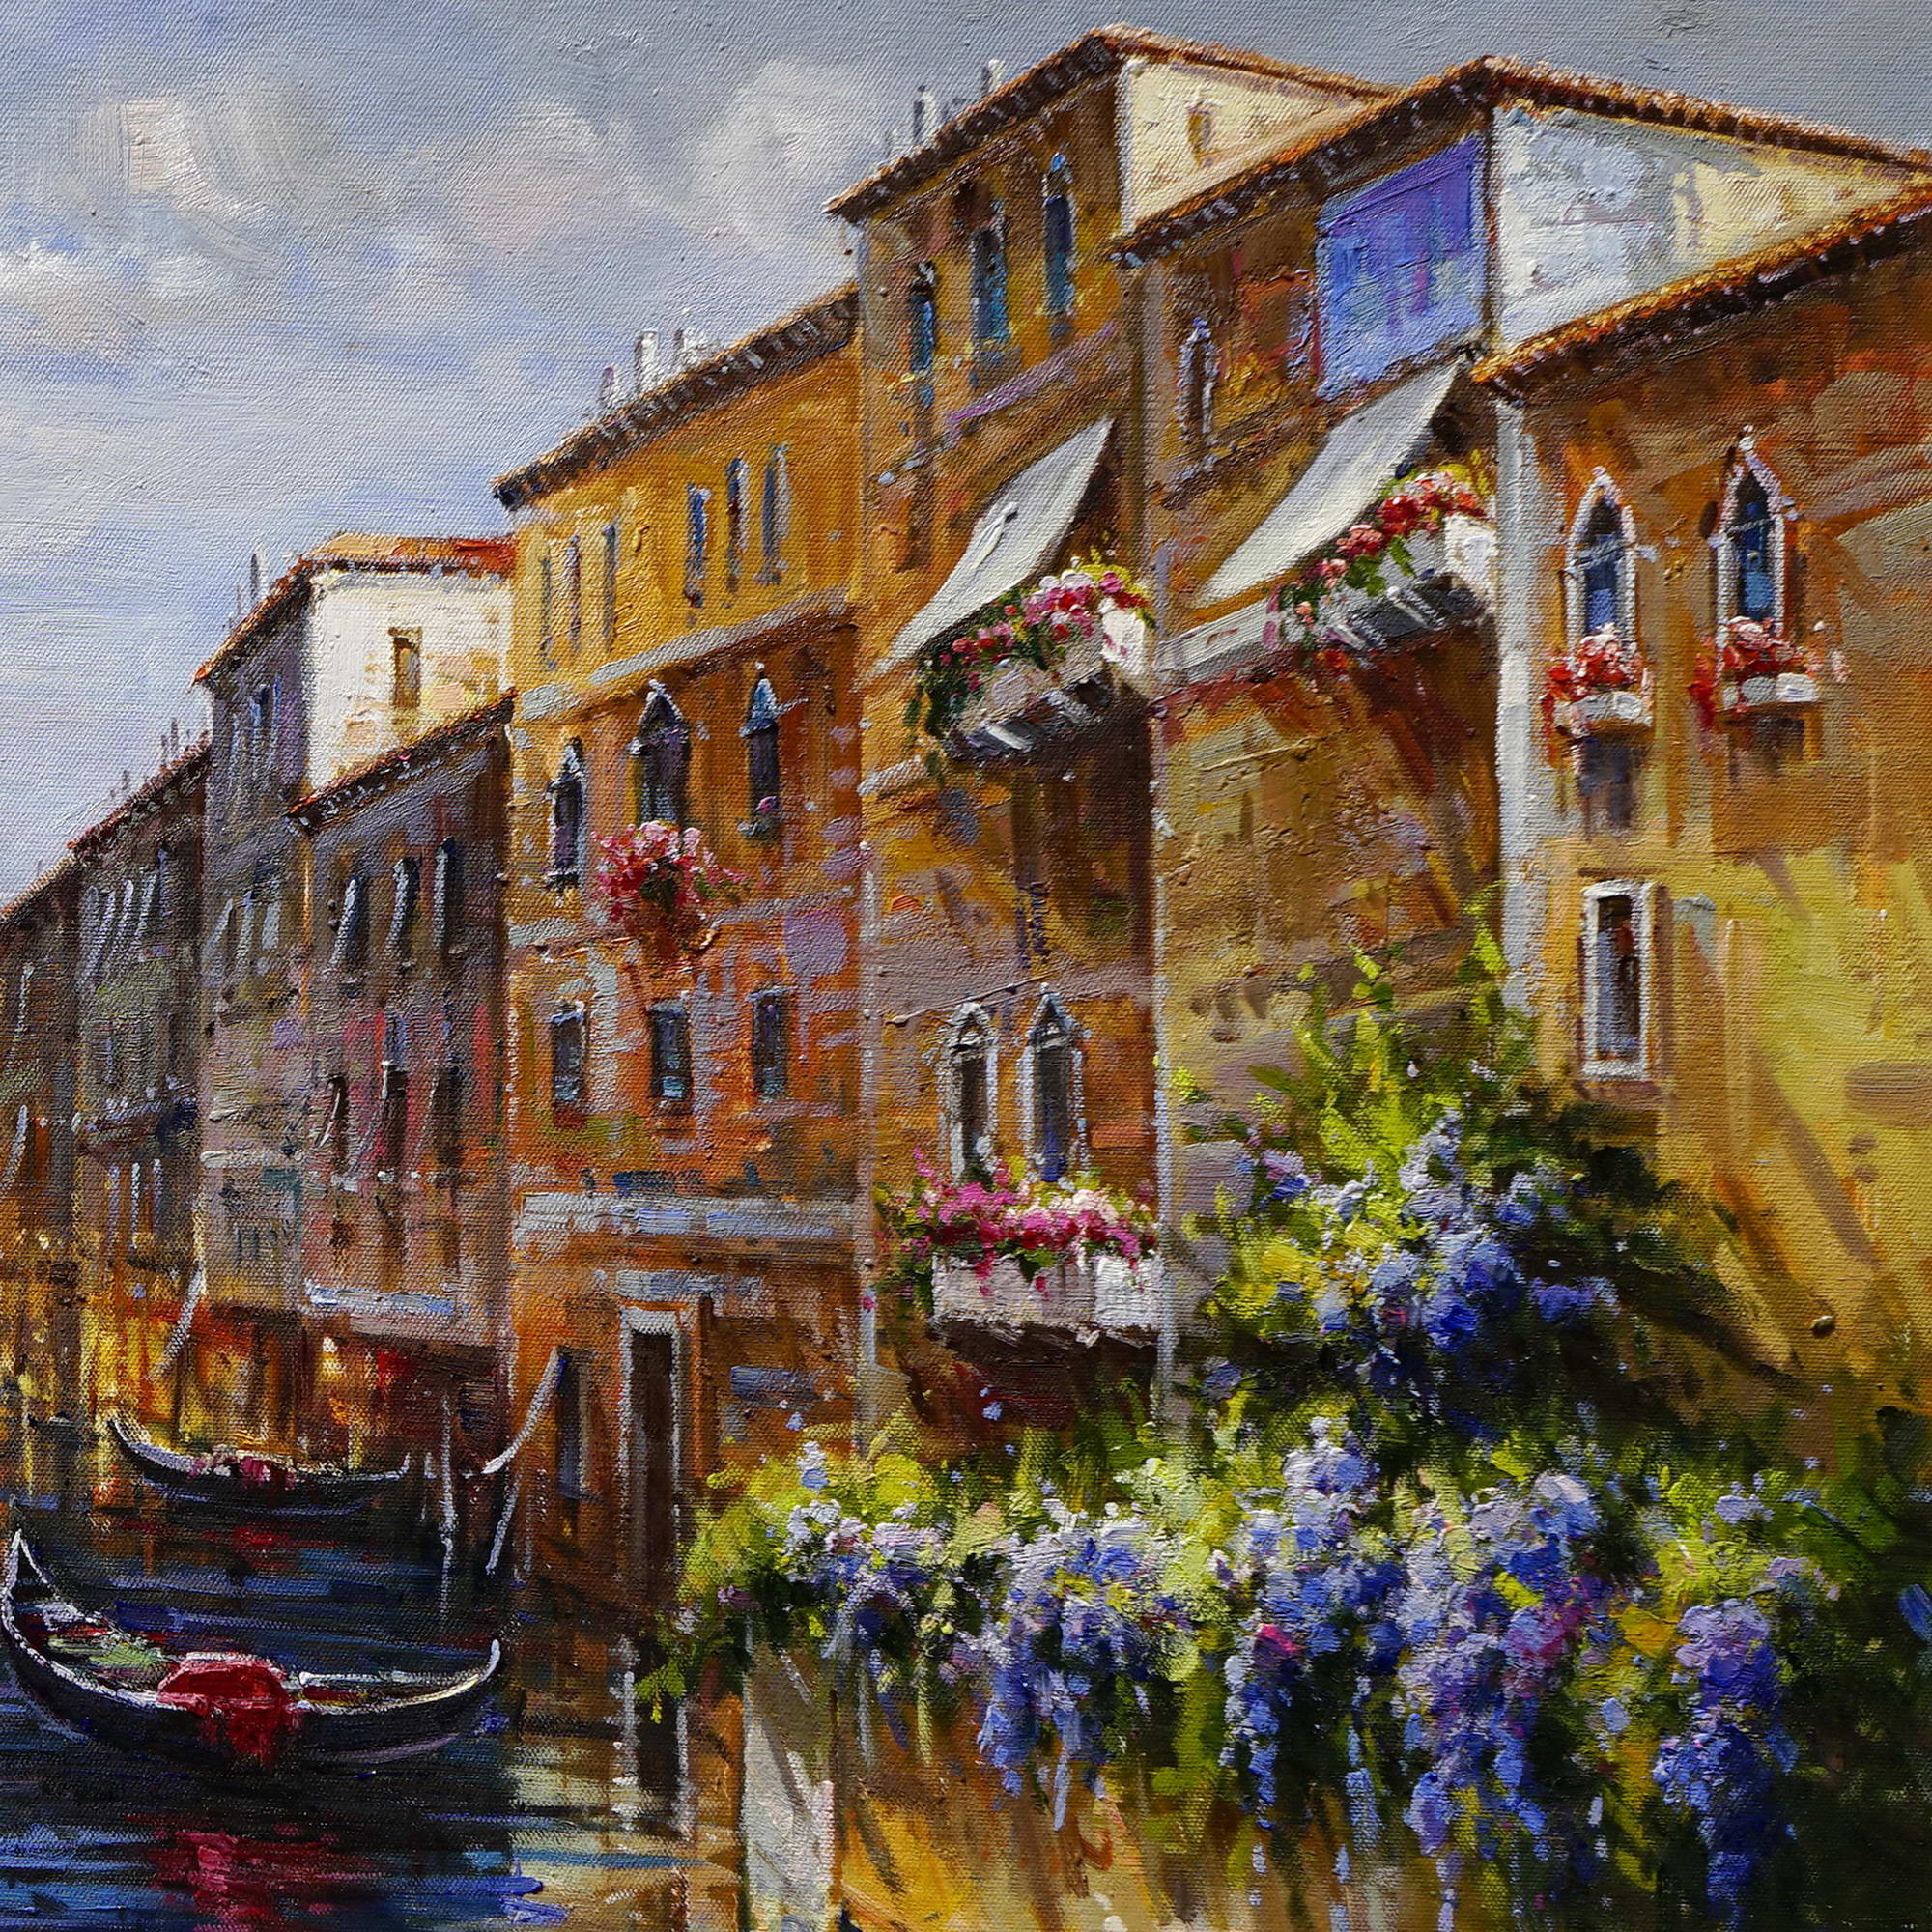 Hand painted Venice Grand Canal Gondolas 75x150cm